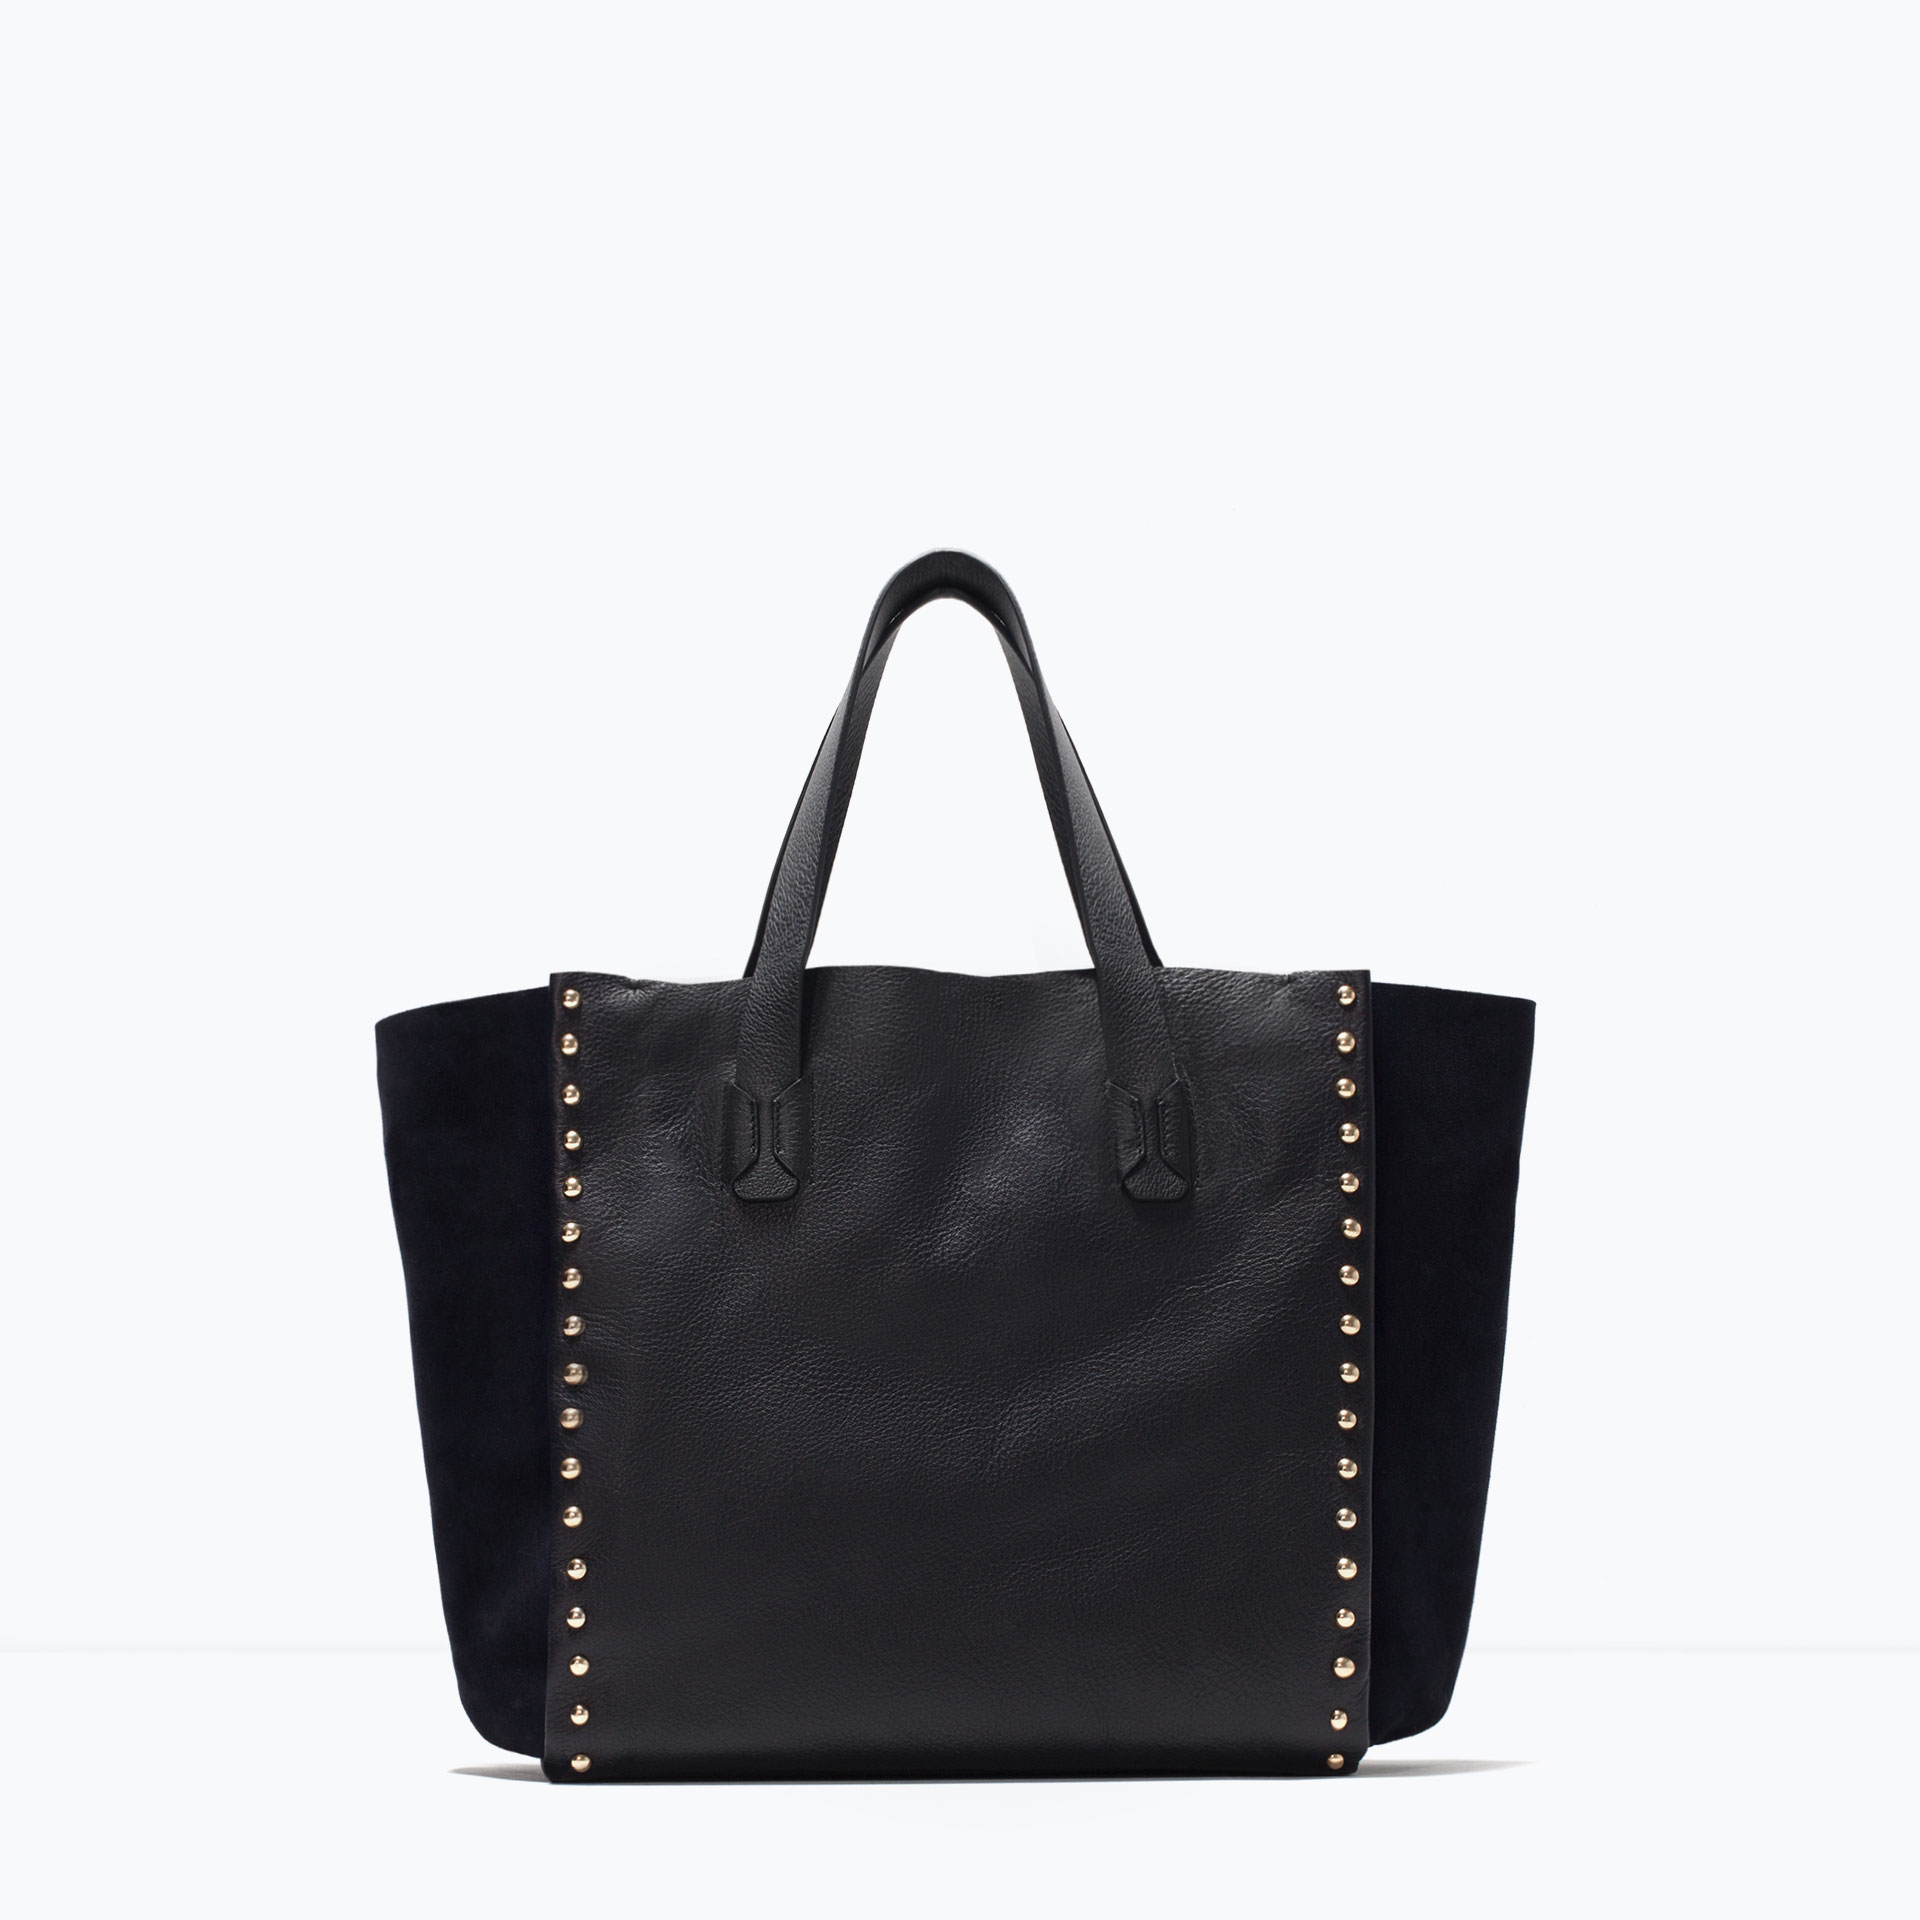 Zara Studded Leather Shopper Bag in Black | Lyst